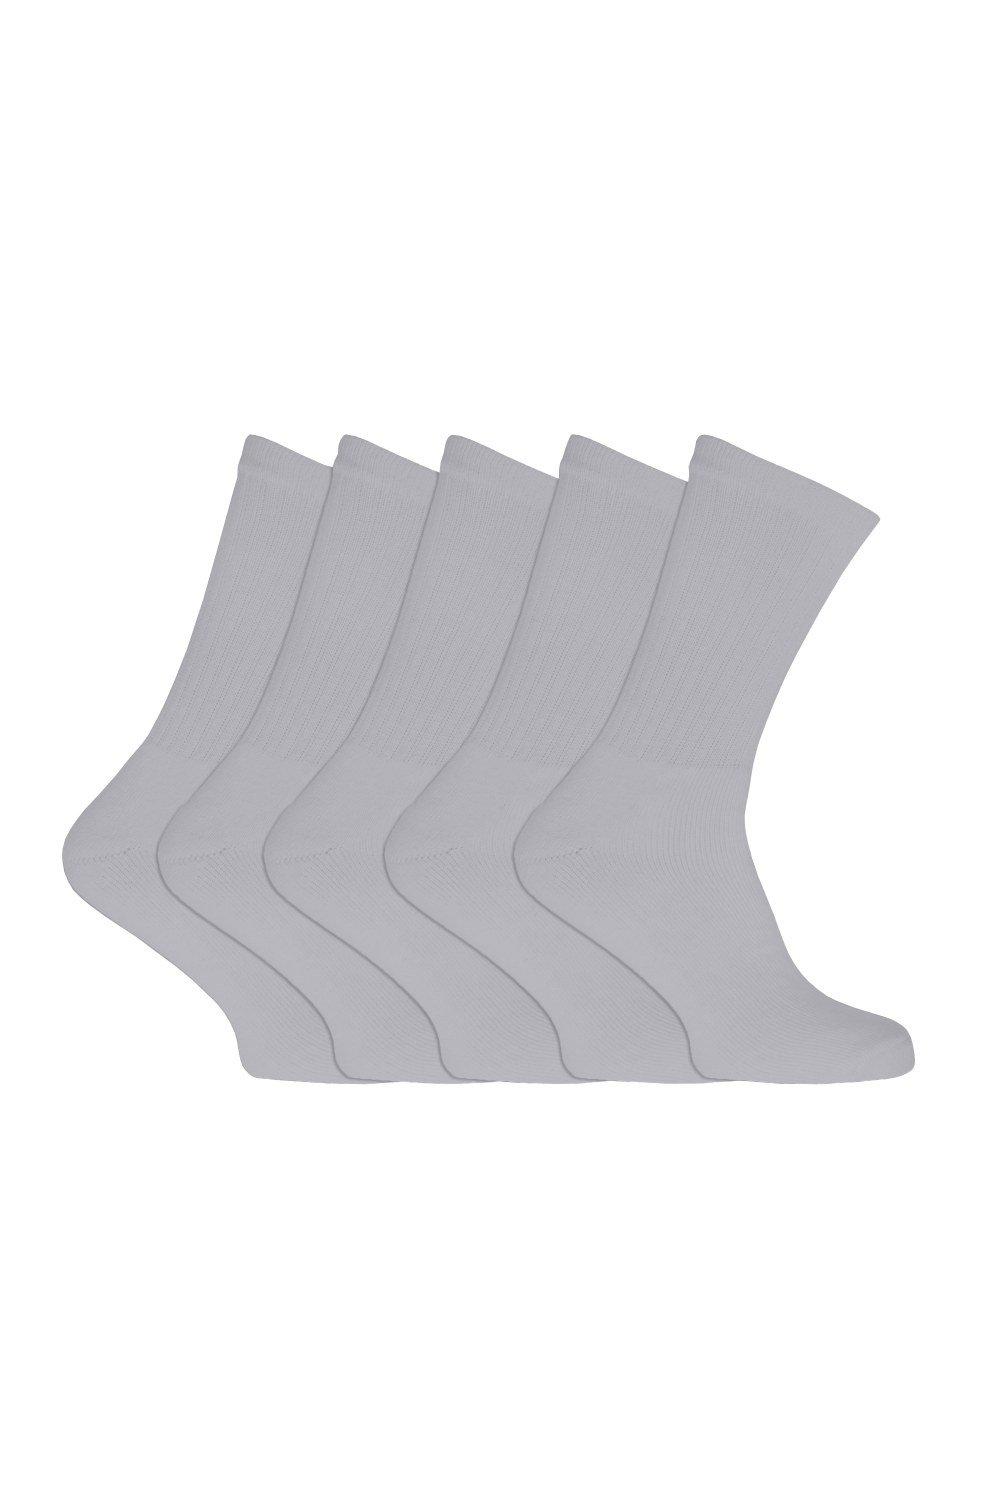 Plain Sports Socks (Pack Of 5)